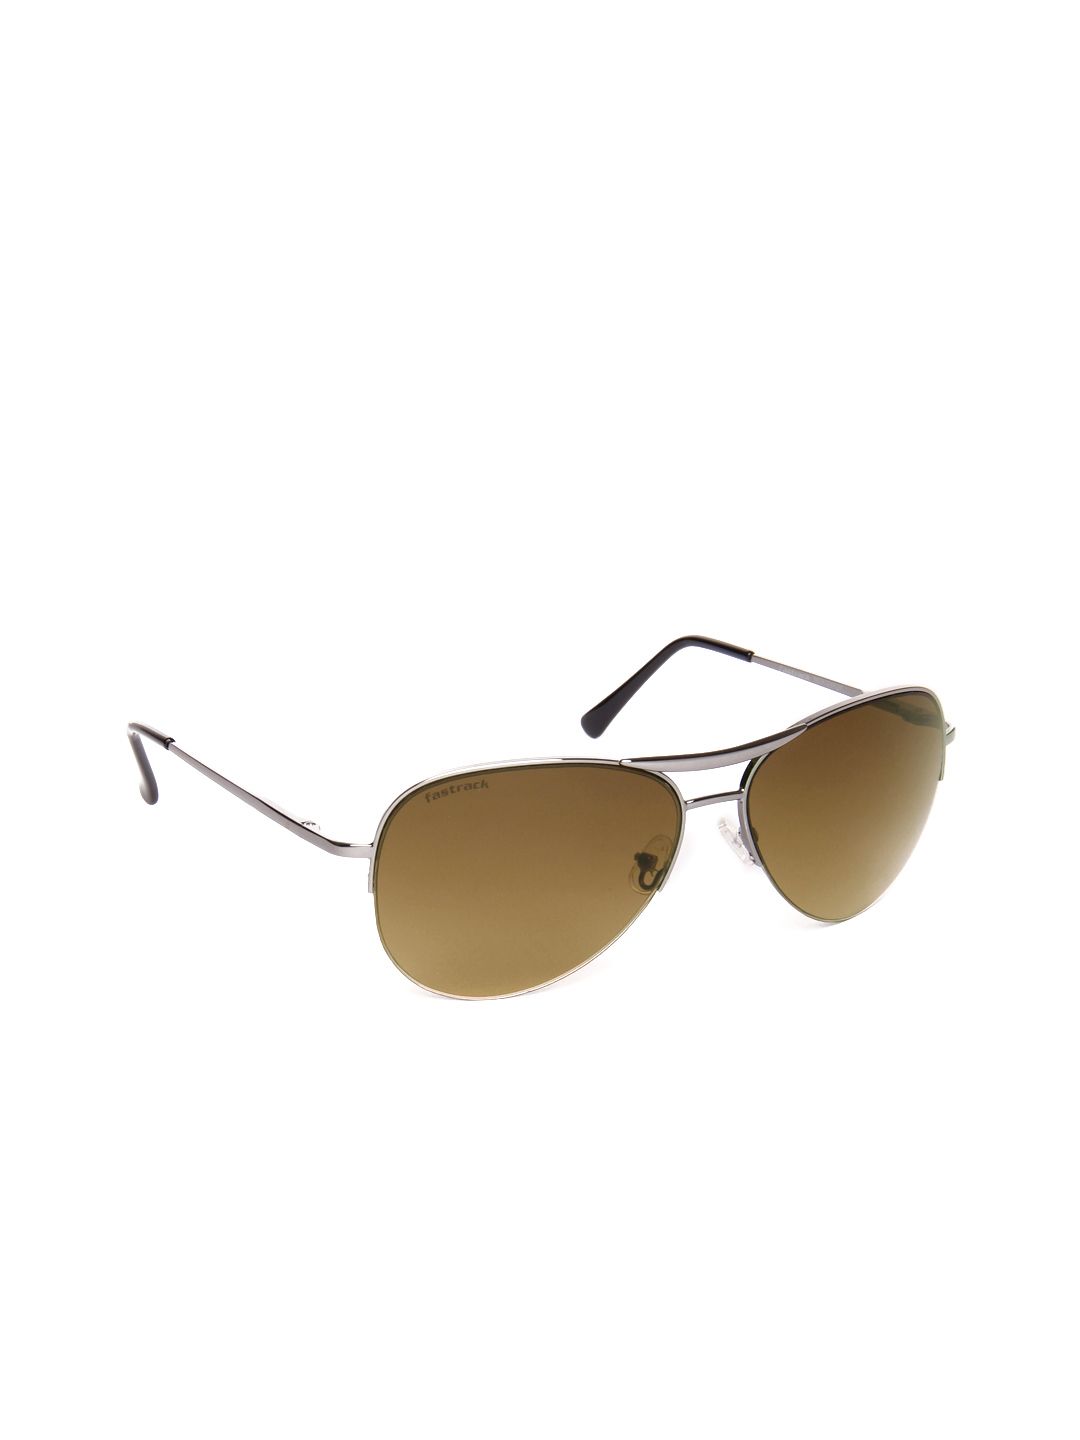 Fastrack Unisex Sunglasses M083BR2F Price in India